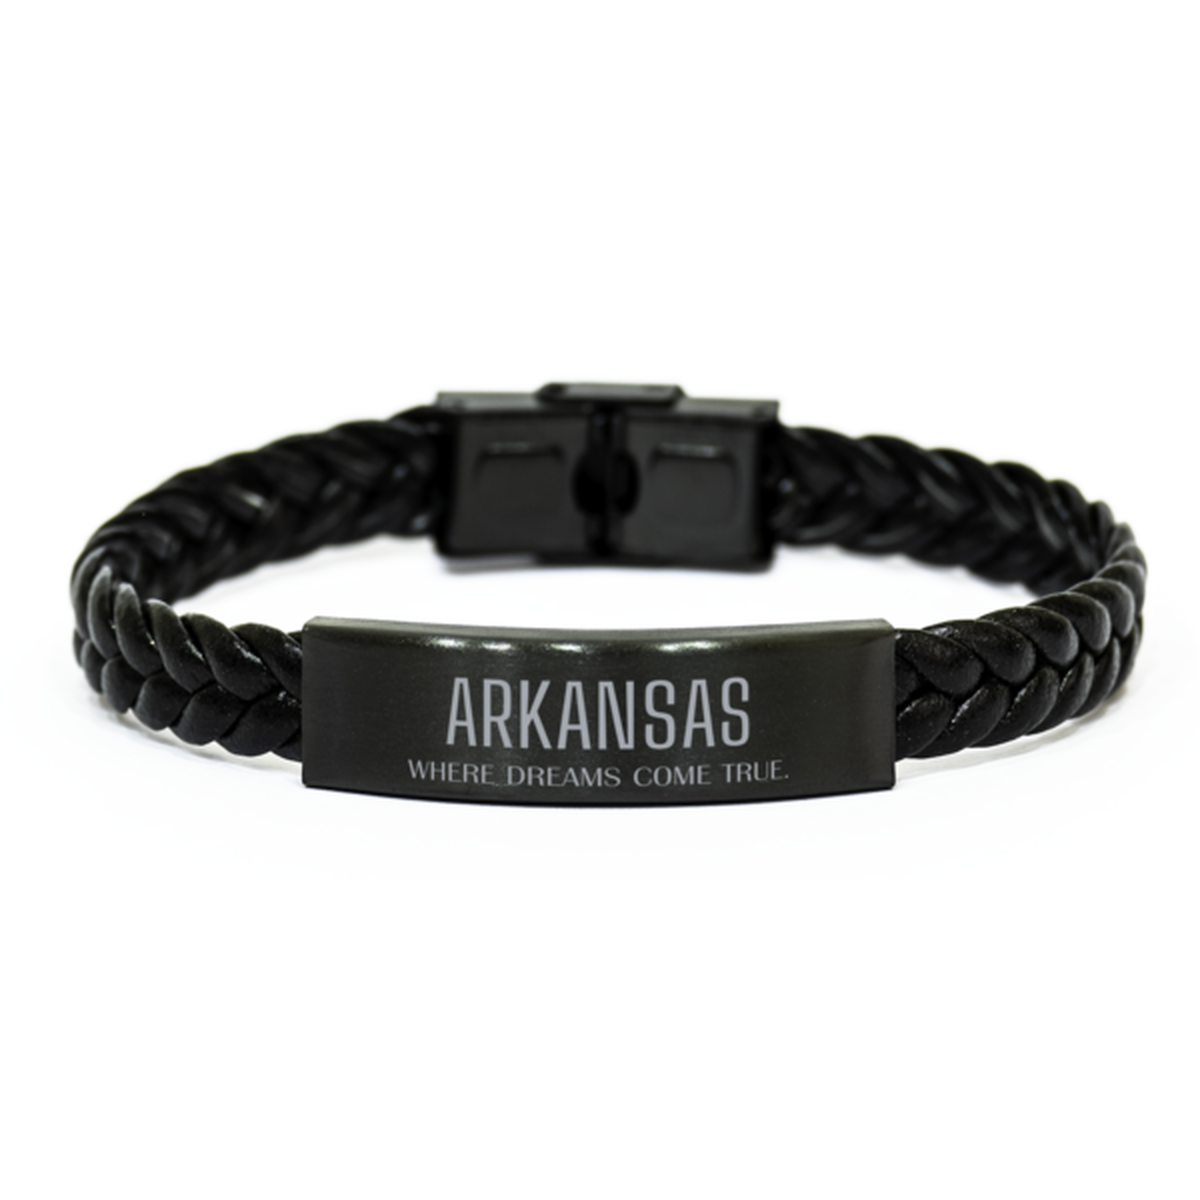 Love Arkansas State Braided Leather Bracelet, Arkansas Where dreams come true, Birthday Inspirational Gifts For Arkansas Men, Women, Friends